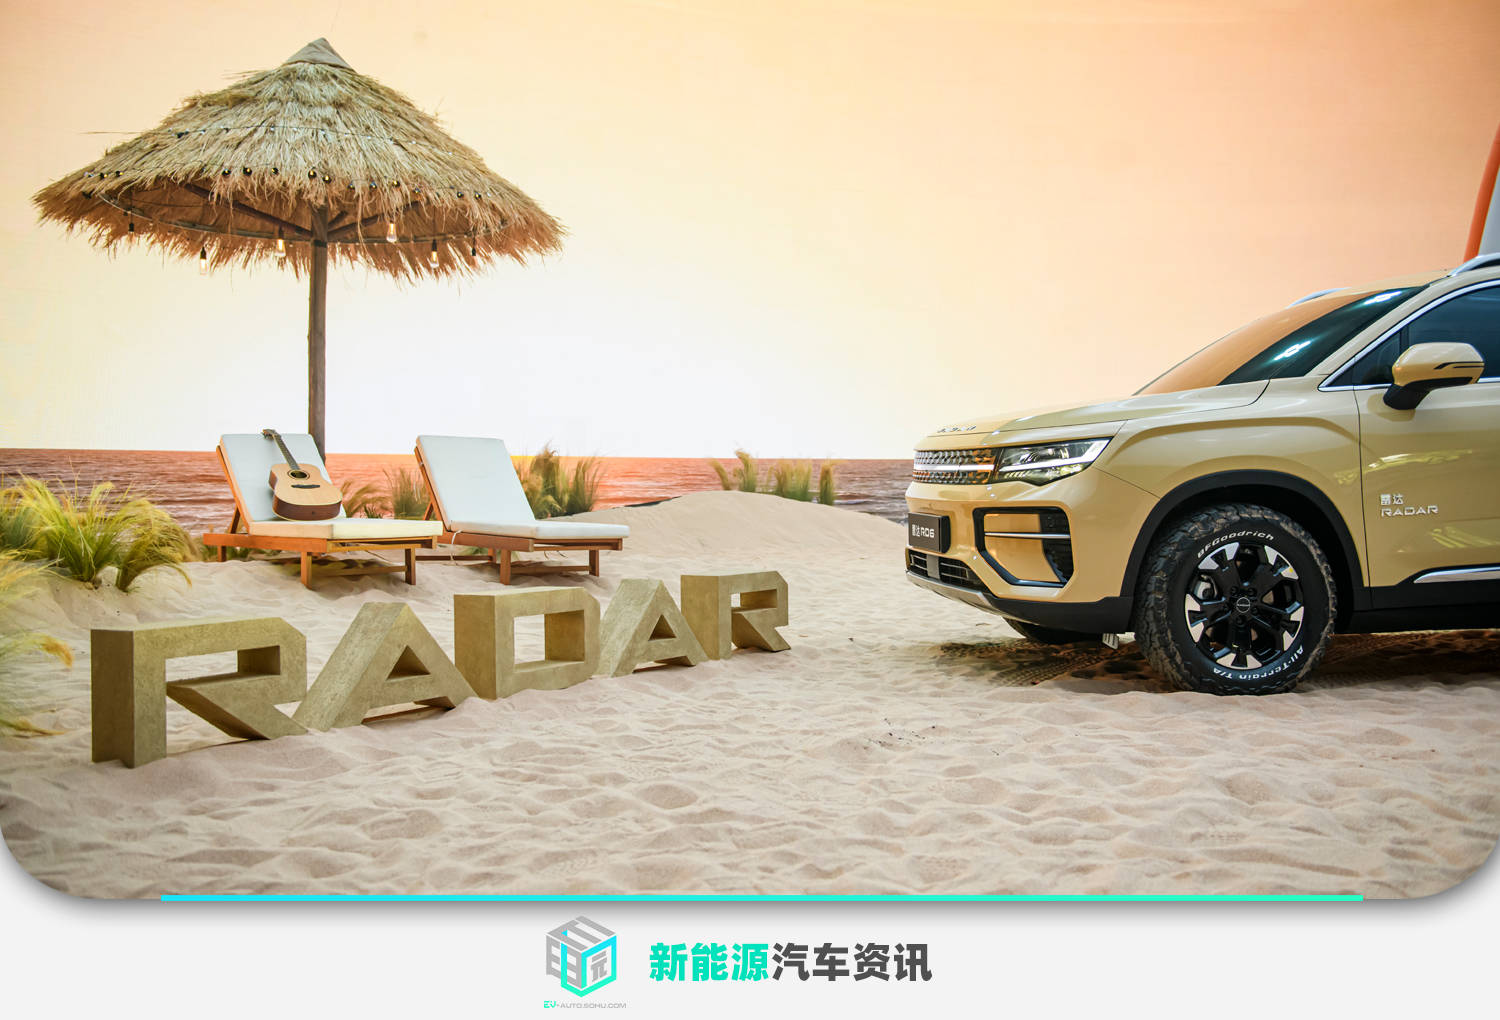 RADAR聲納國際品牌正式宣布正式發布 第一款純電動車捷達三季度掛牌上市